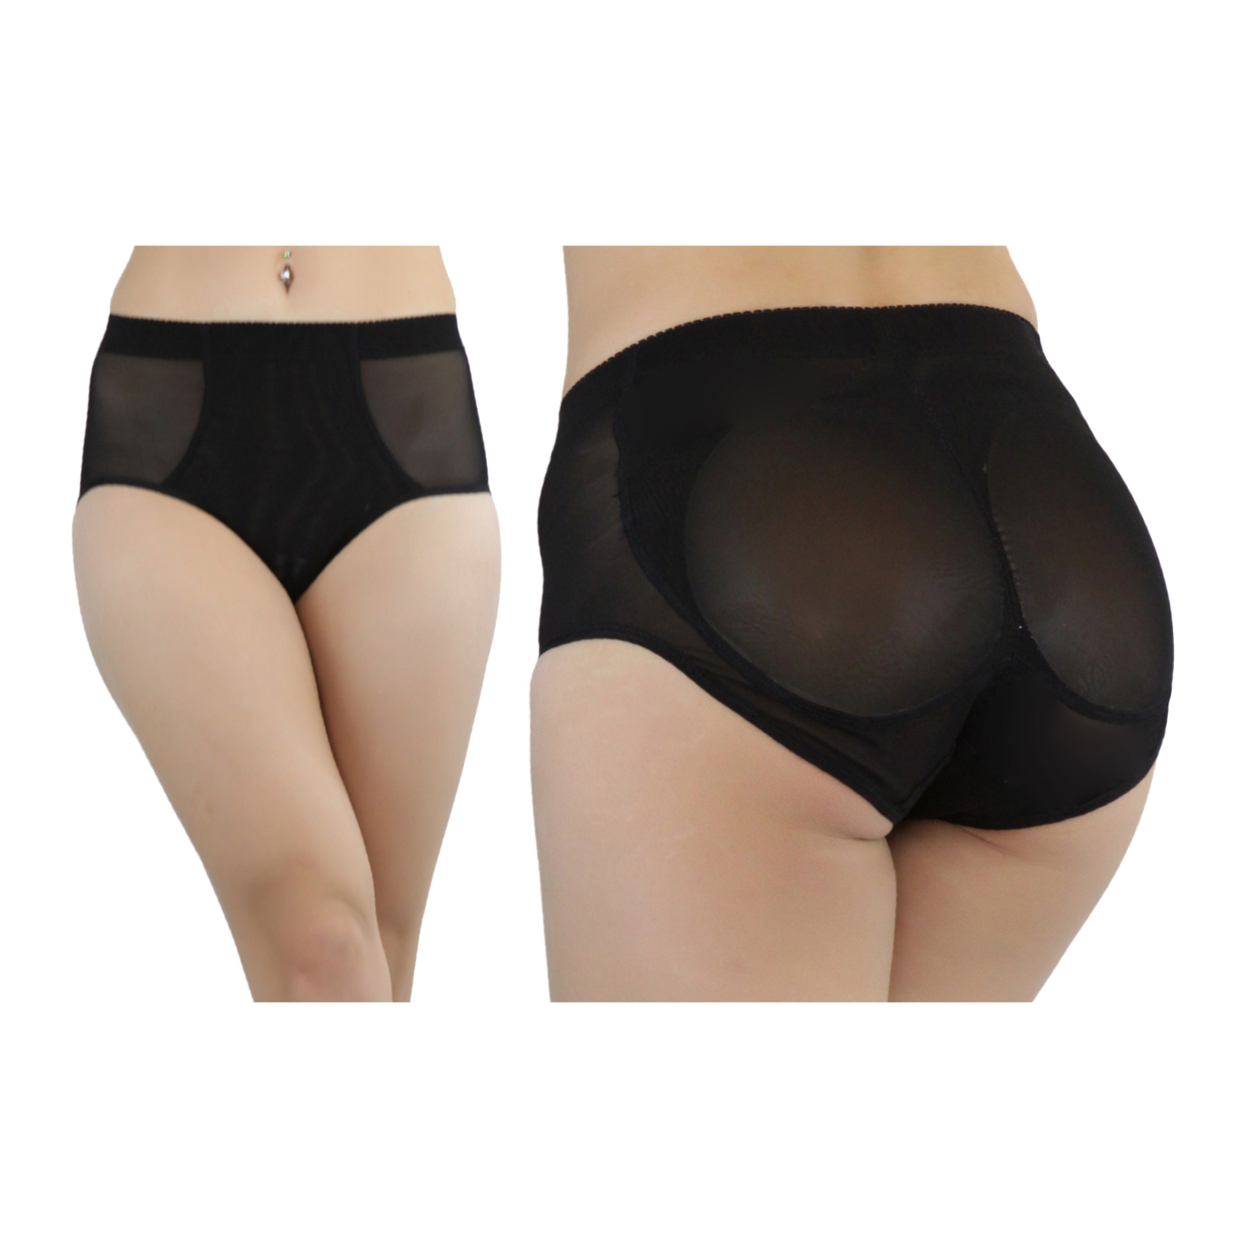 Women's Silicone Instant Buttocks Enhancer Panties - Black, L